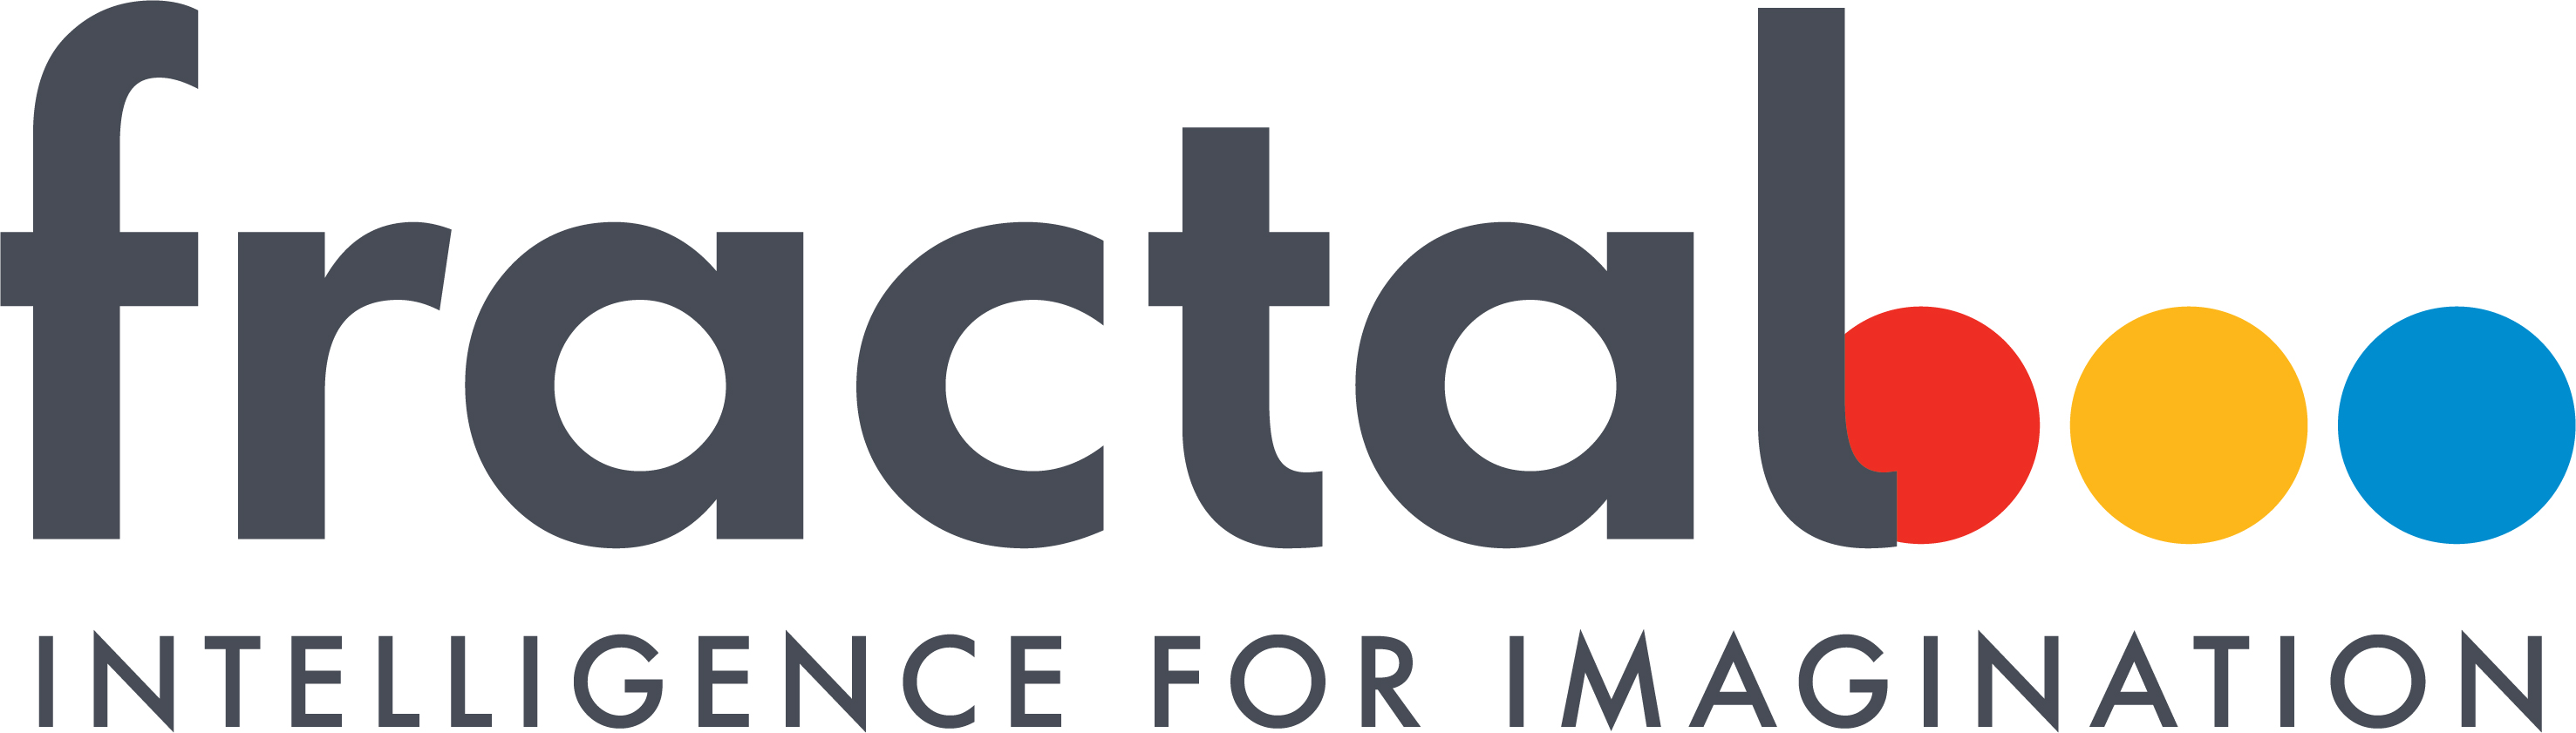 Fractal-Logo-WithBL